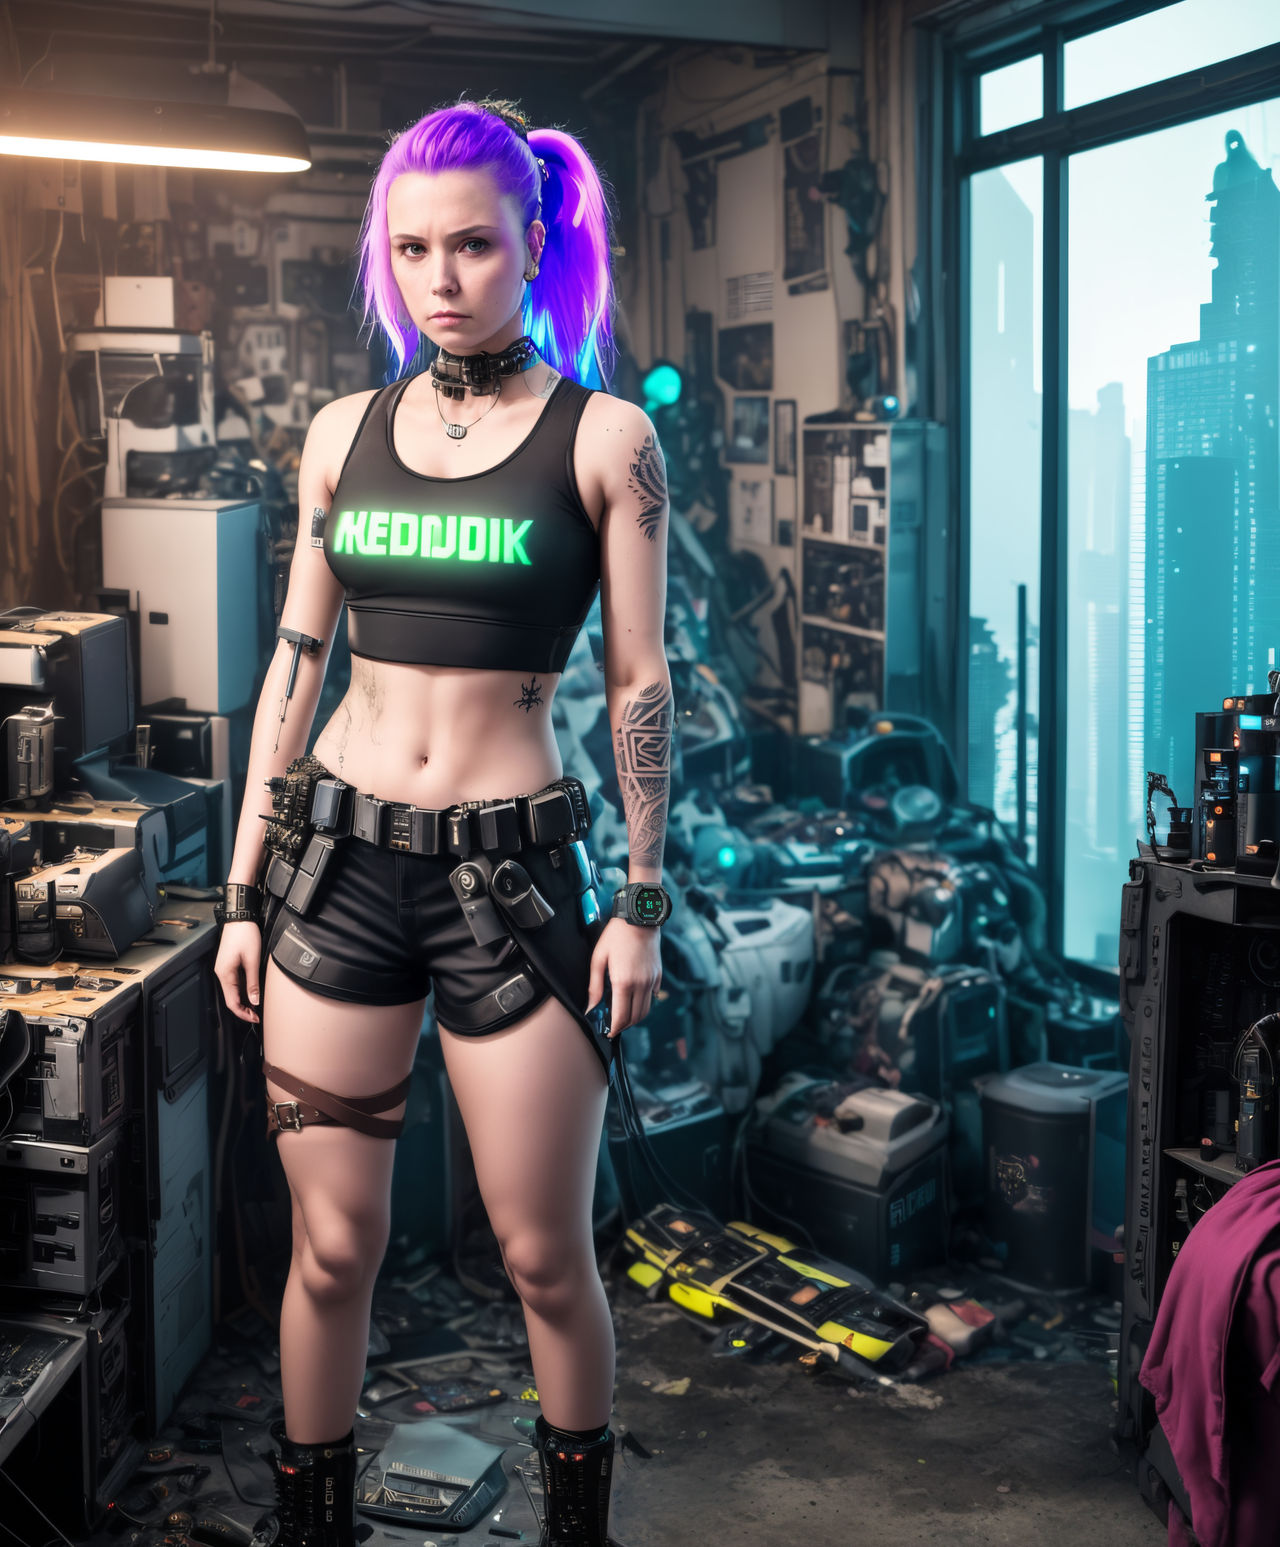 Gamer Room: Cyberpunk by exceptrea on DeviantArt